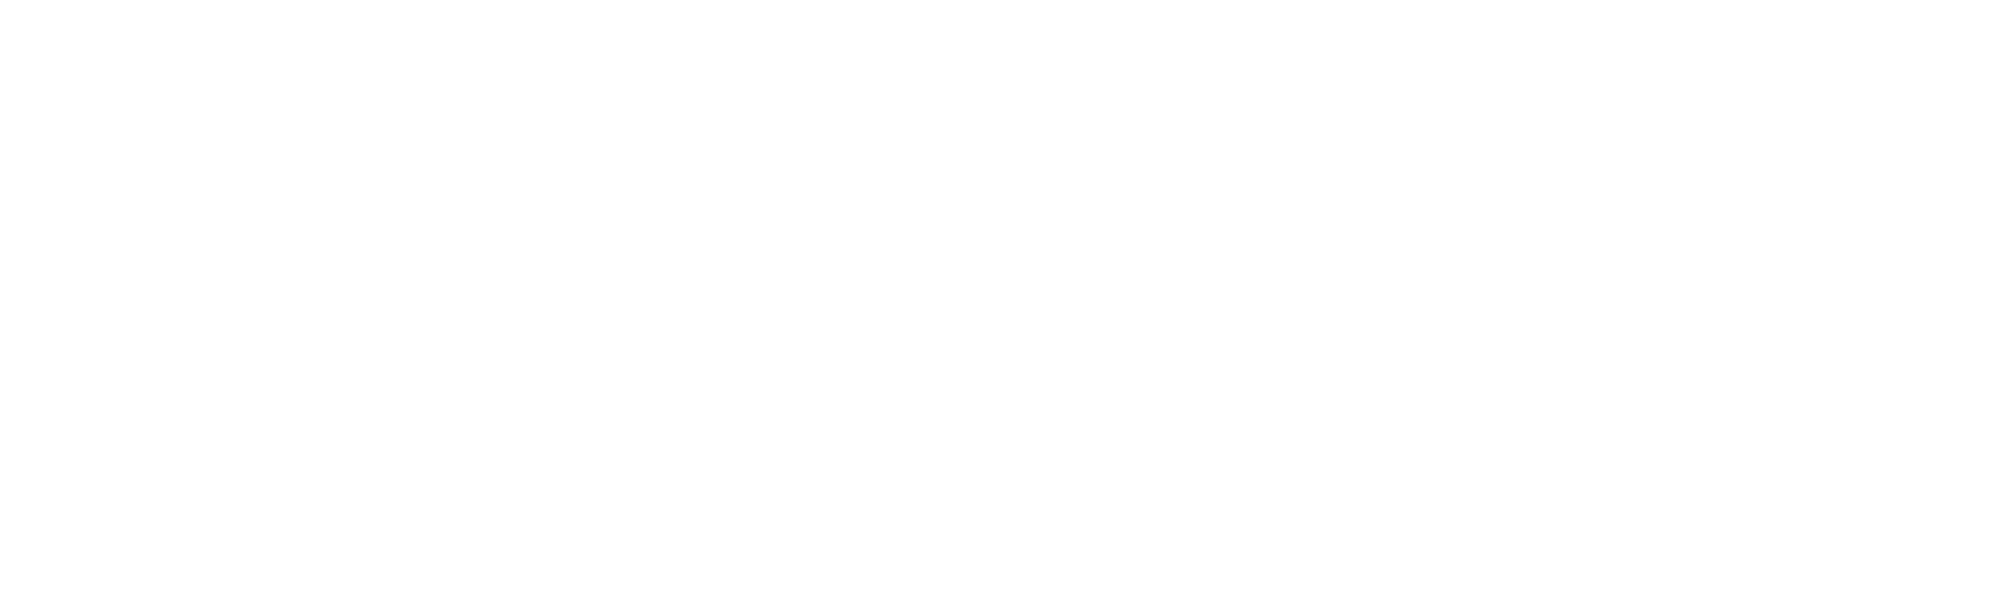 SHEILA A PENROSE & ERNEST MAHAFFEY CHARITABLE FOUNDATION INC | logo